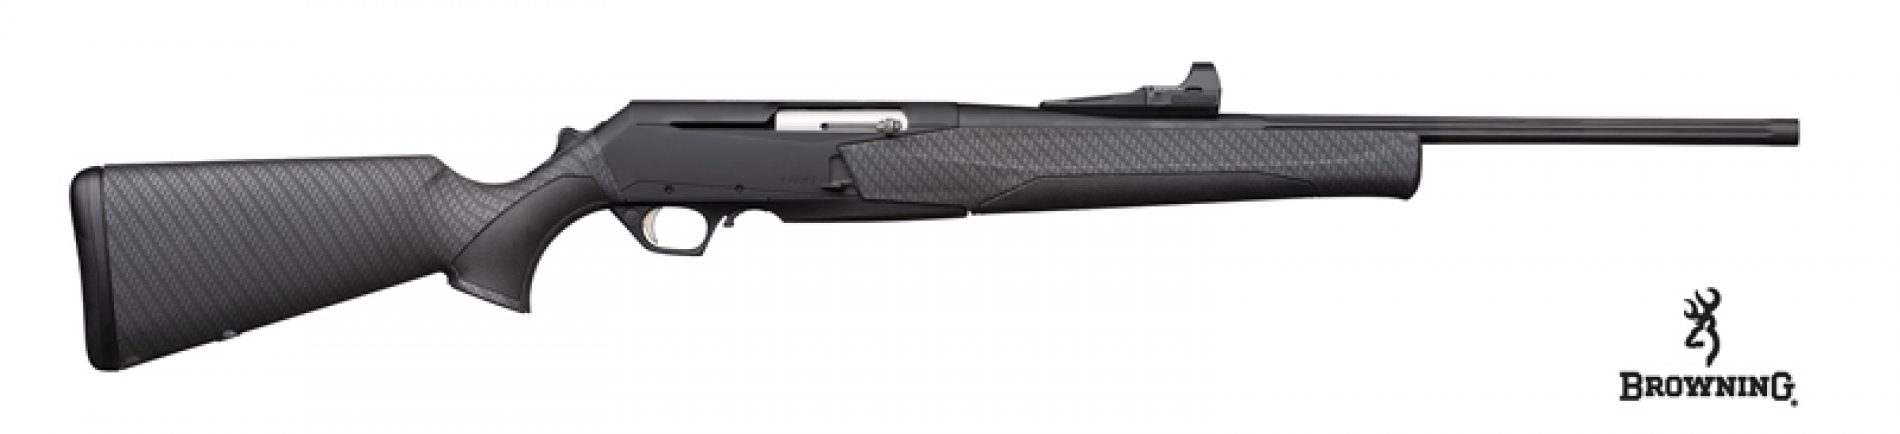 Nuevo rifle semiautomático: BAR MK3 Reflex Composite